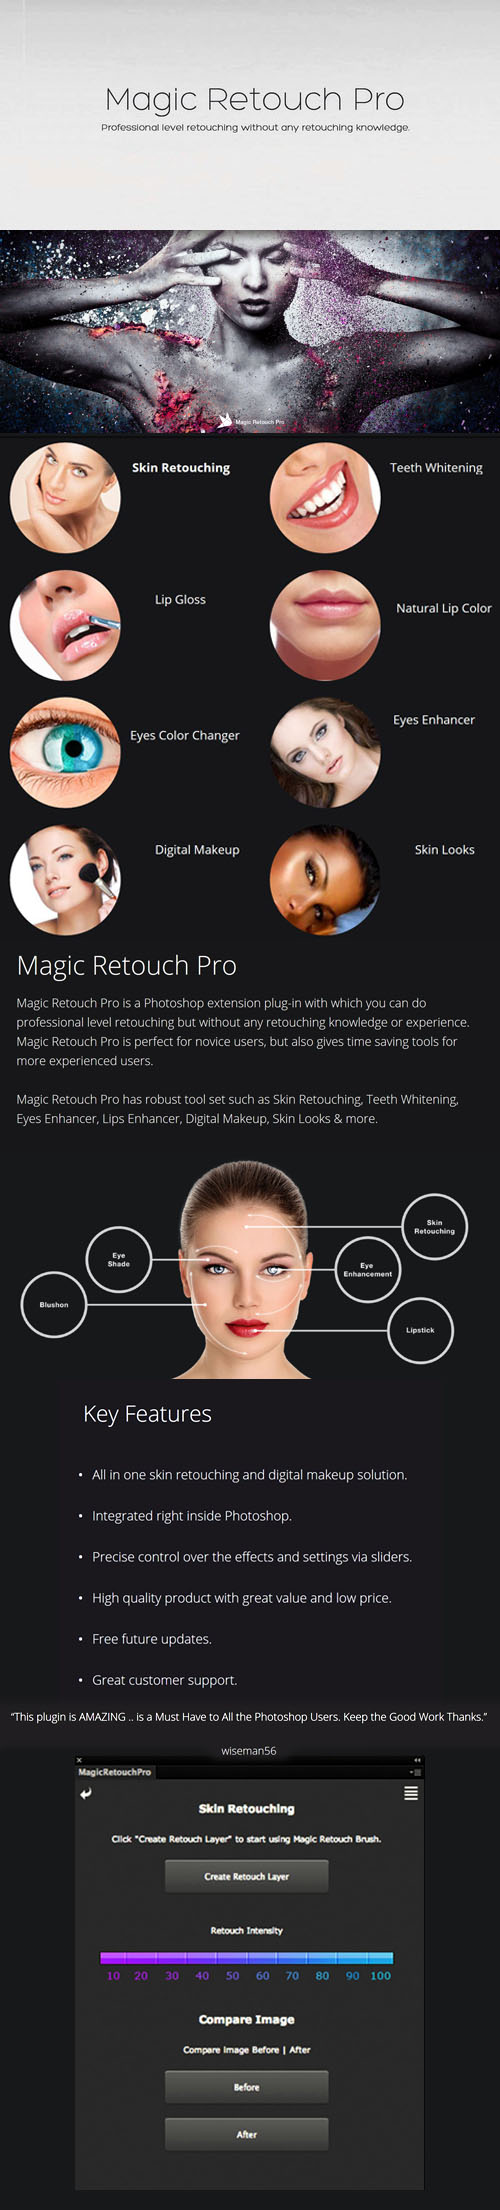 Magic Retouch Pro 4.2 Plugin for Photoshop (Win/Mac)